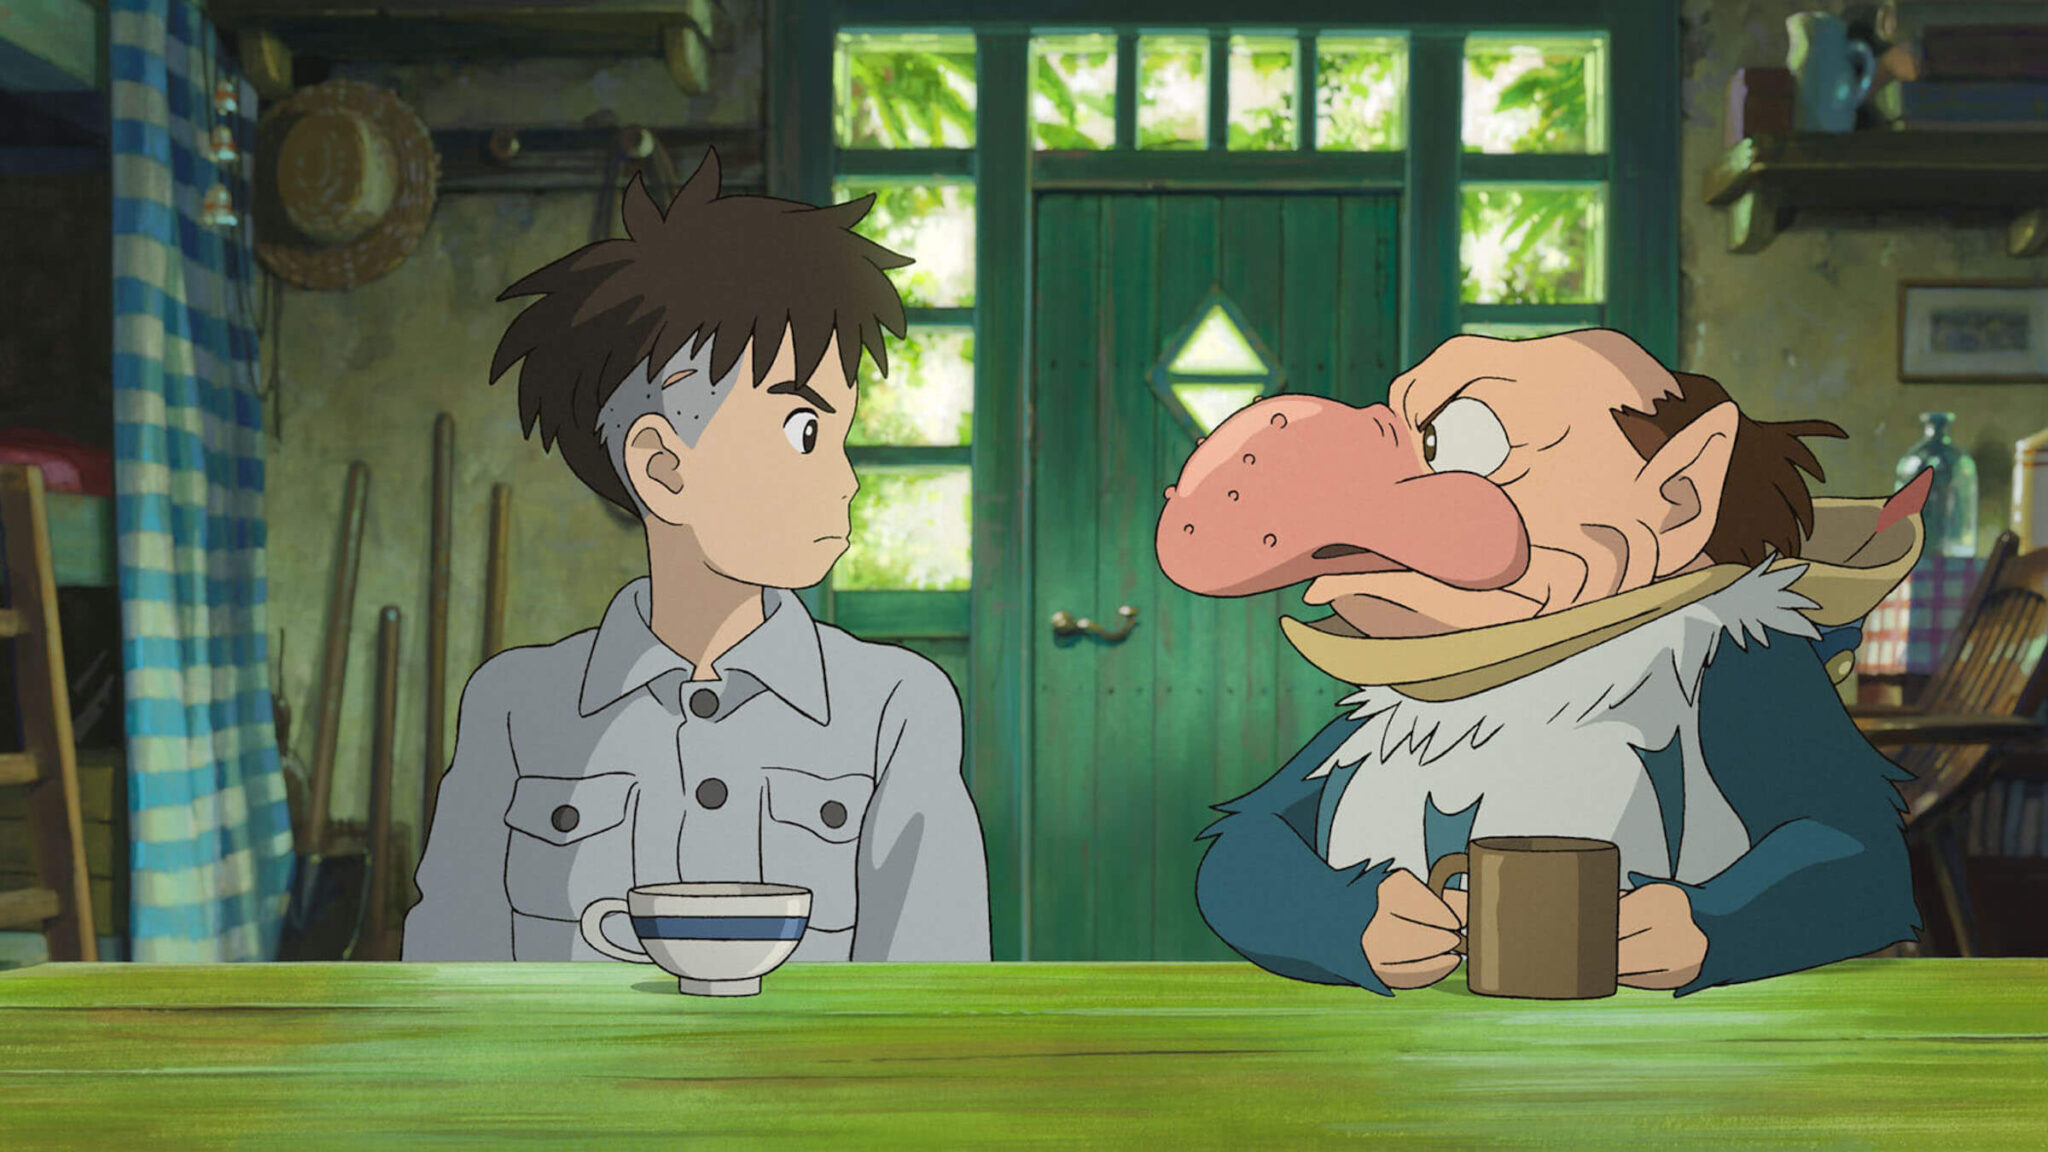 5 Trademarks of a Hayao Miyazaki Movies - ScreenCraft